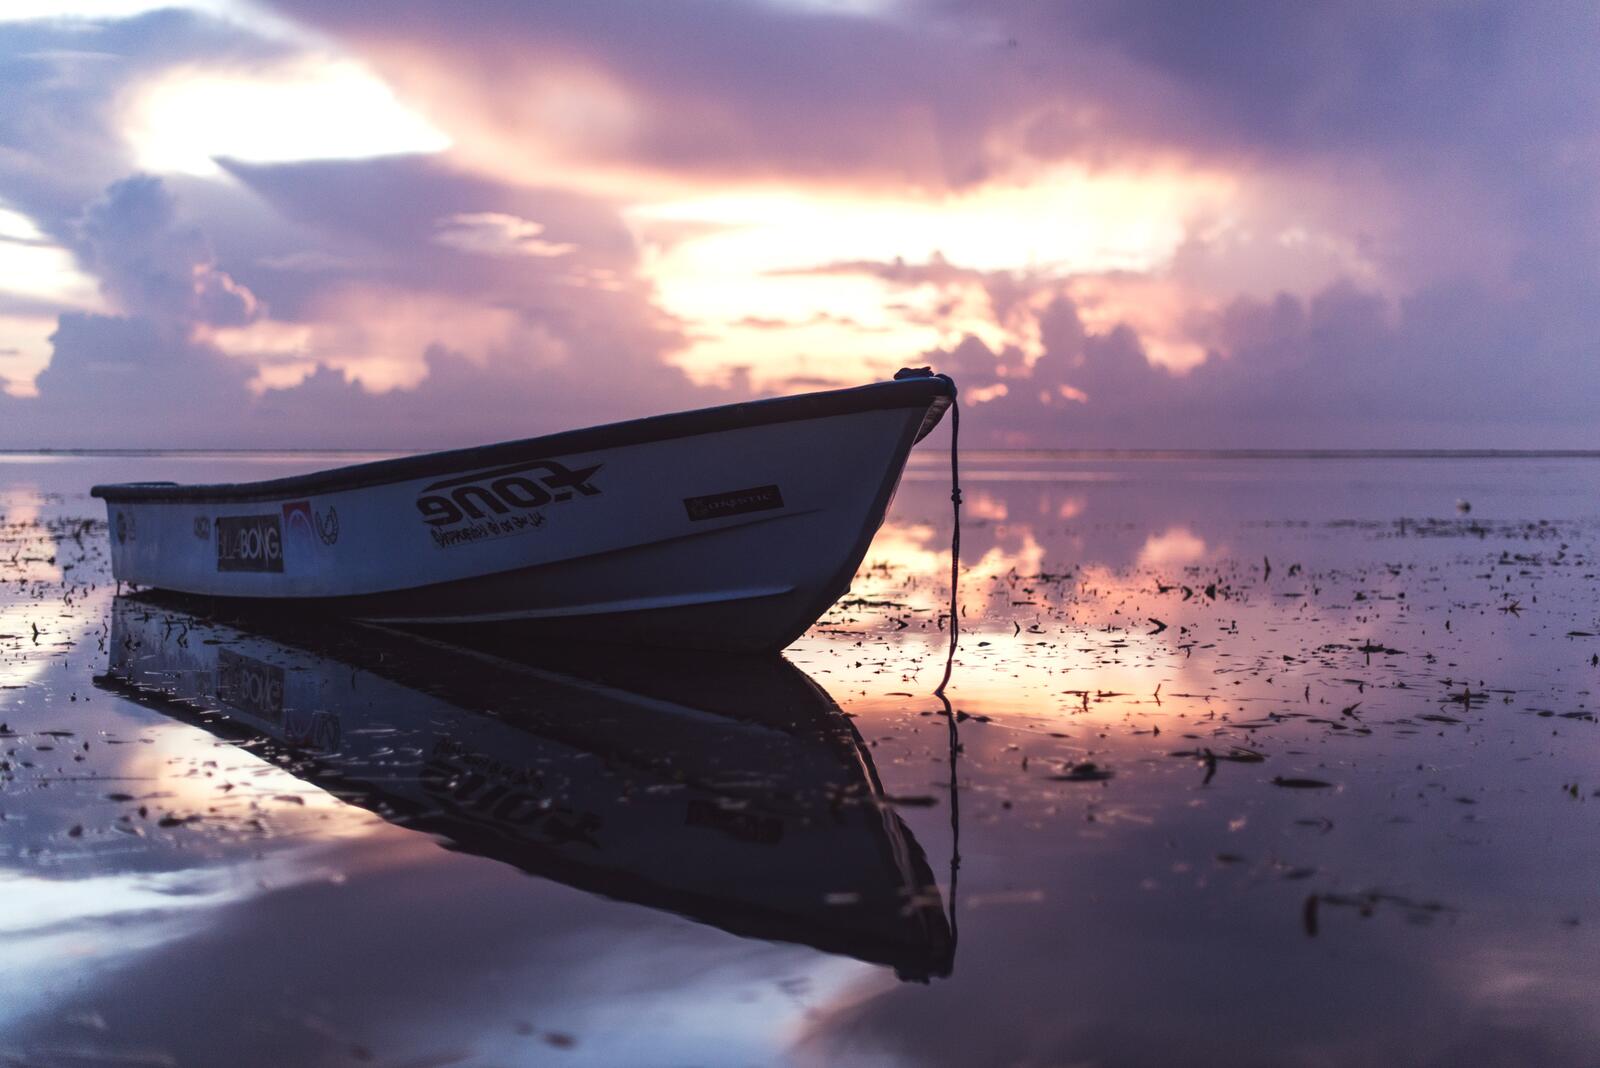 Бесплатное фото Деревянная лодка на фоне заката